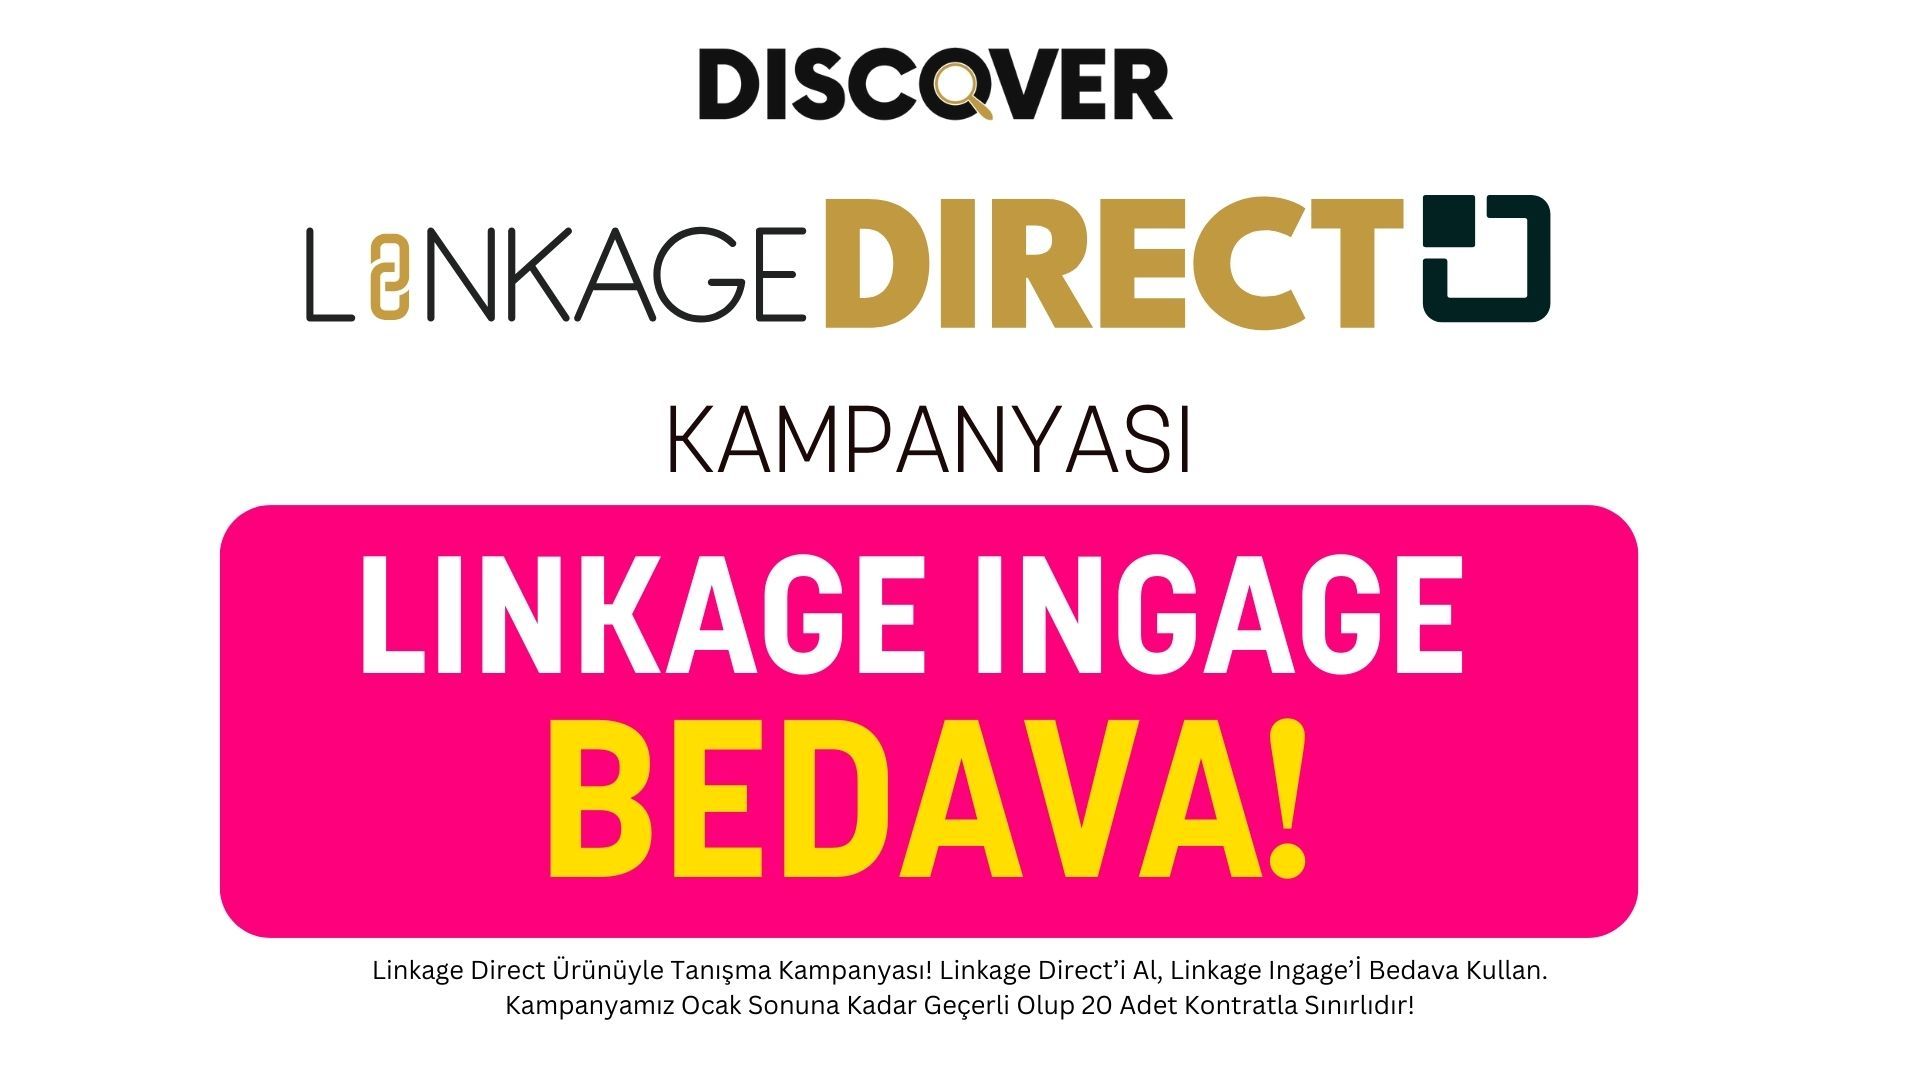 Linkage Direct Alana, Linkage Ingage Bedava